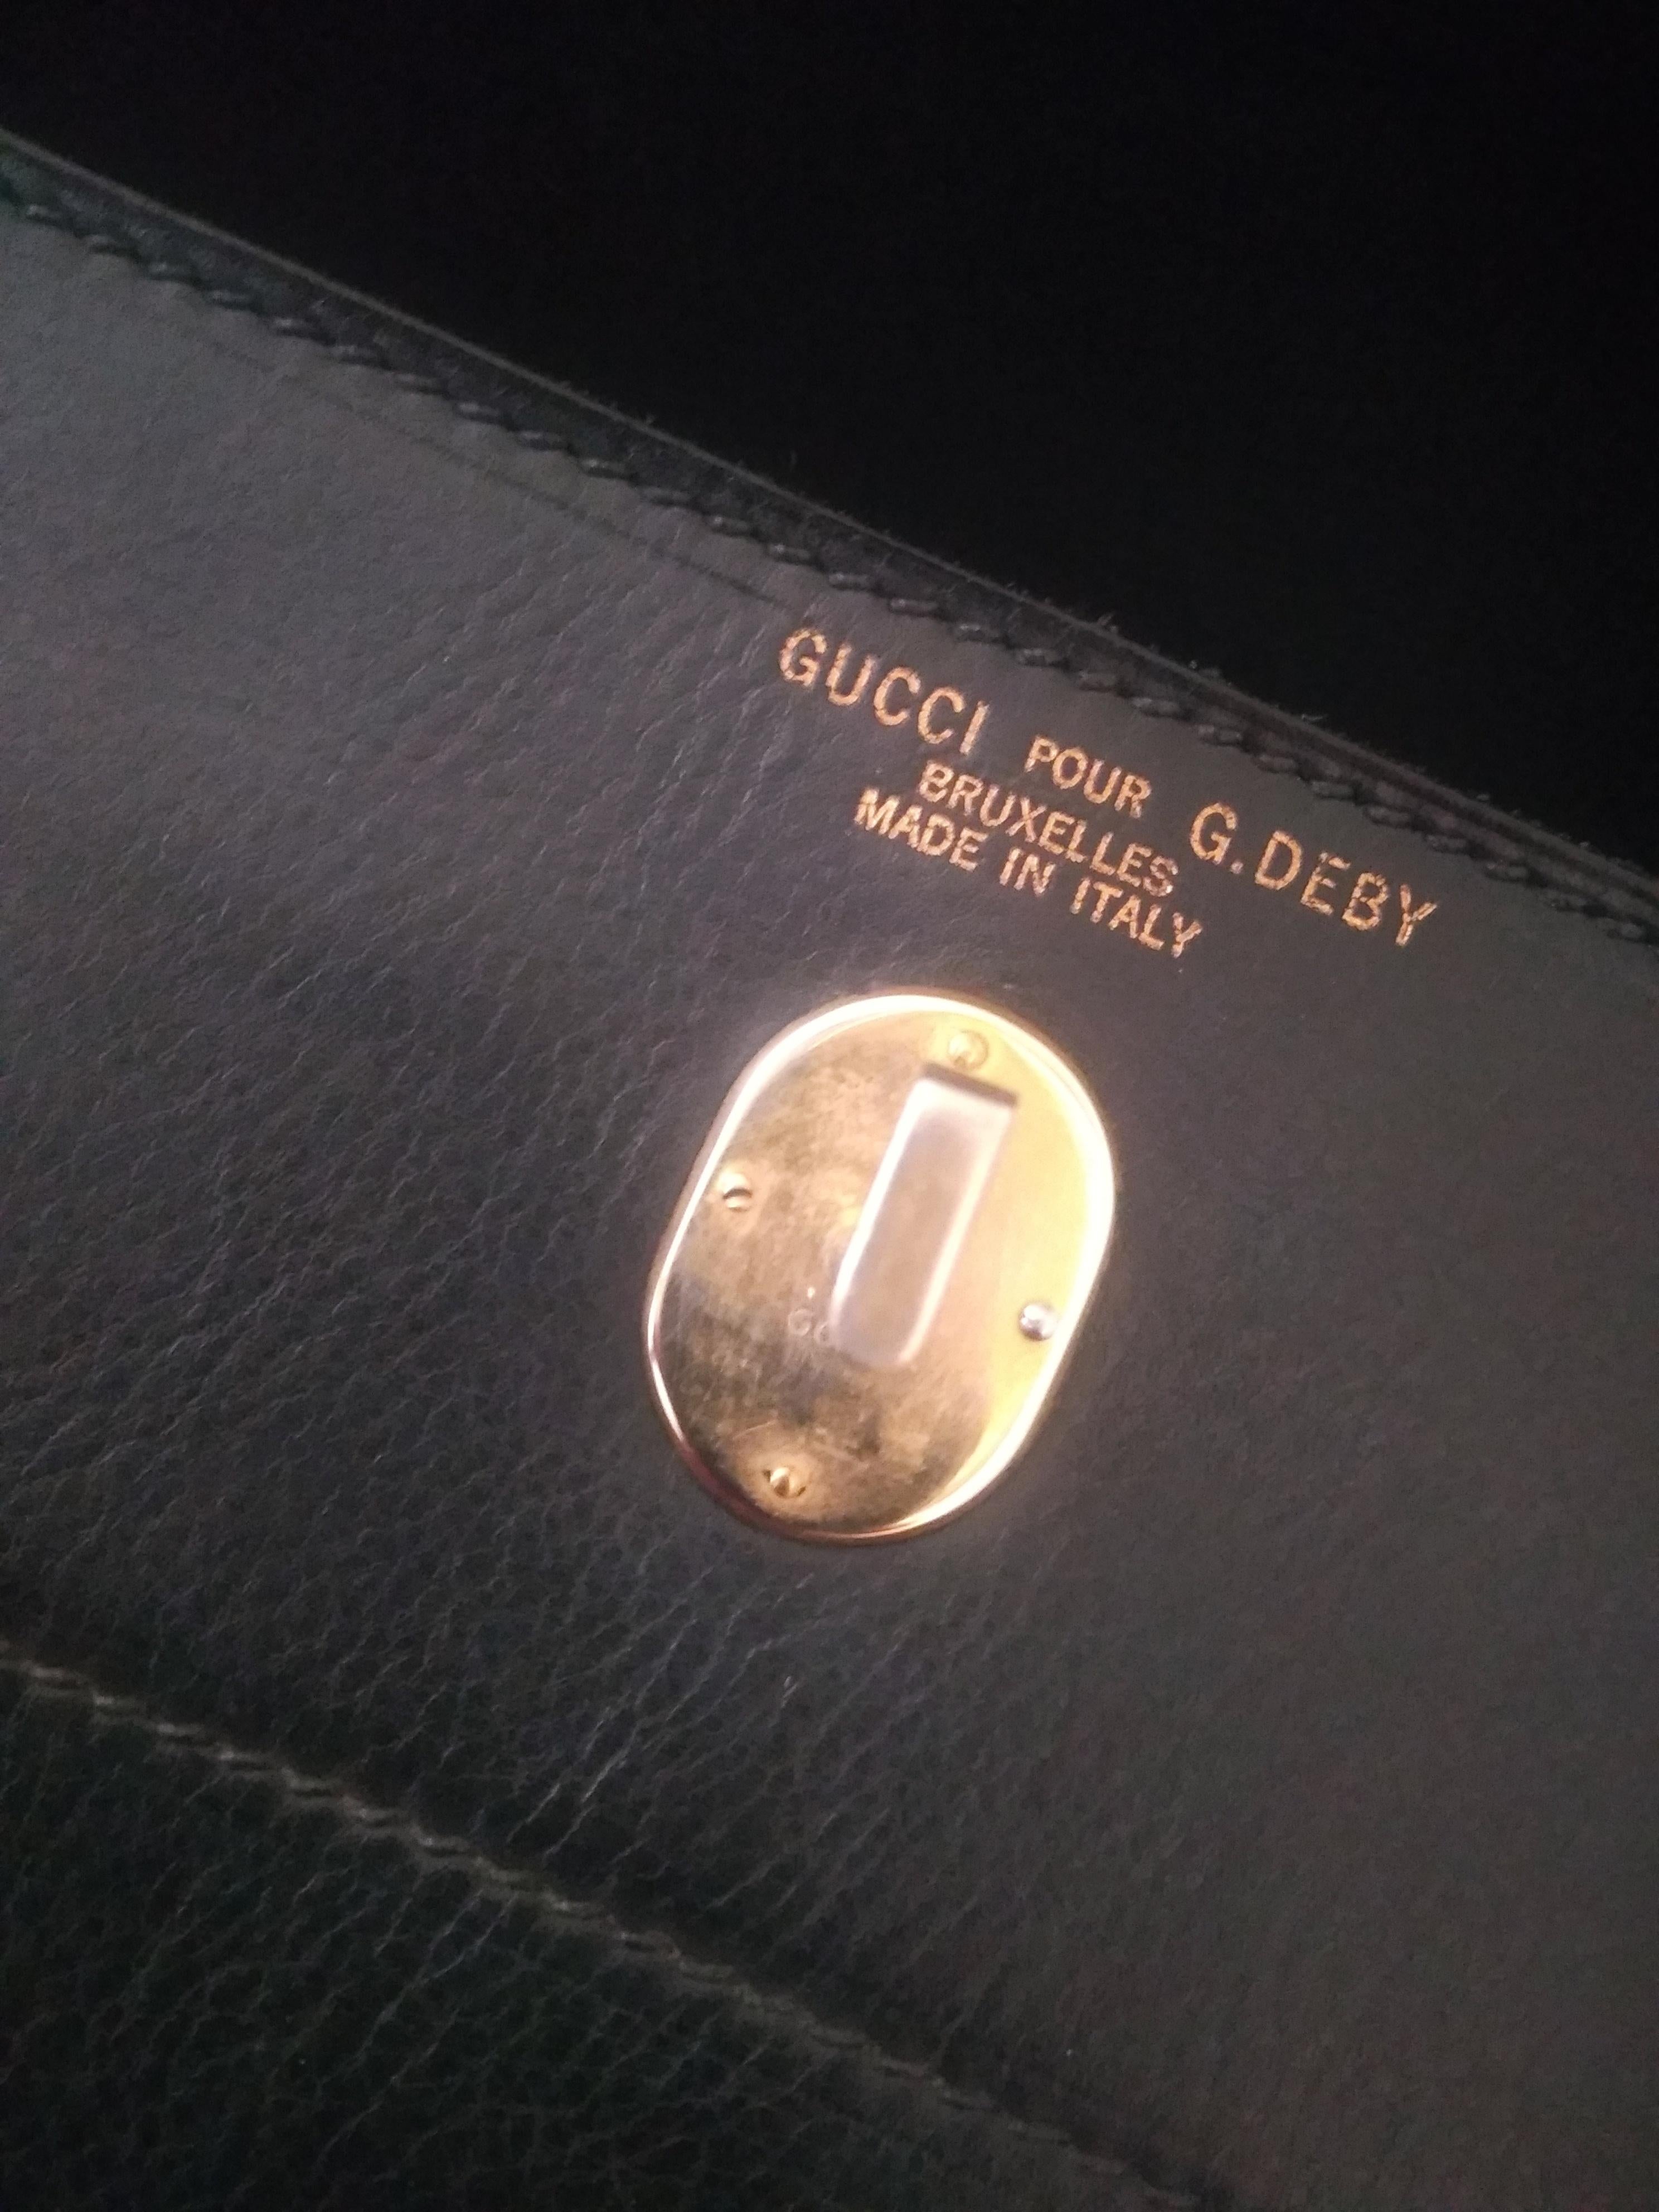 1940s Gucci Black Leather Large Birkin Style Travel Bag 4